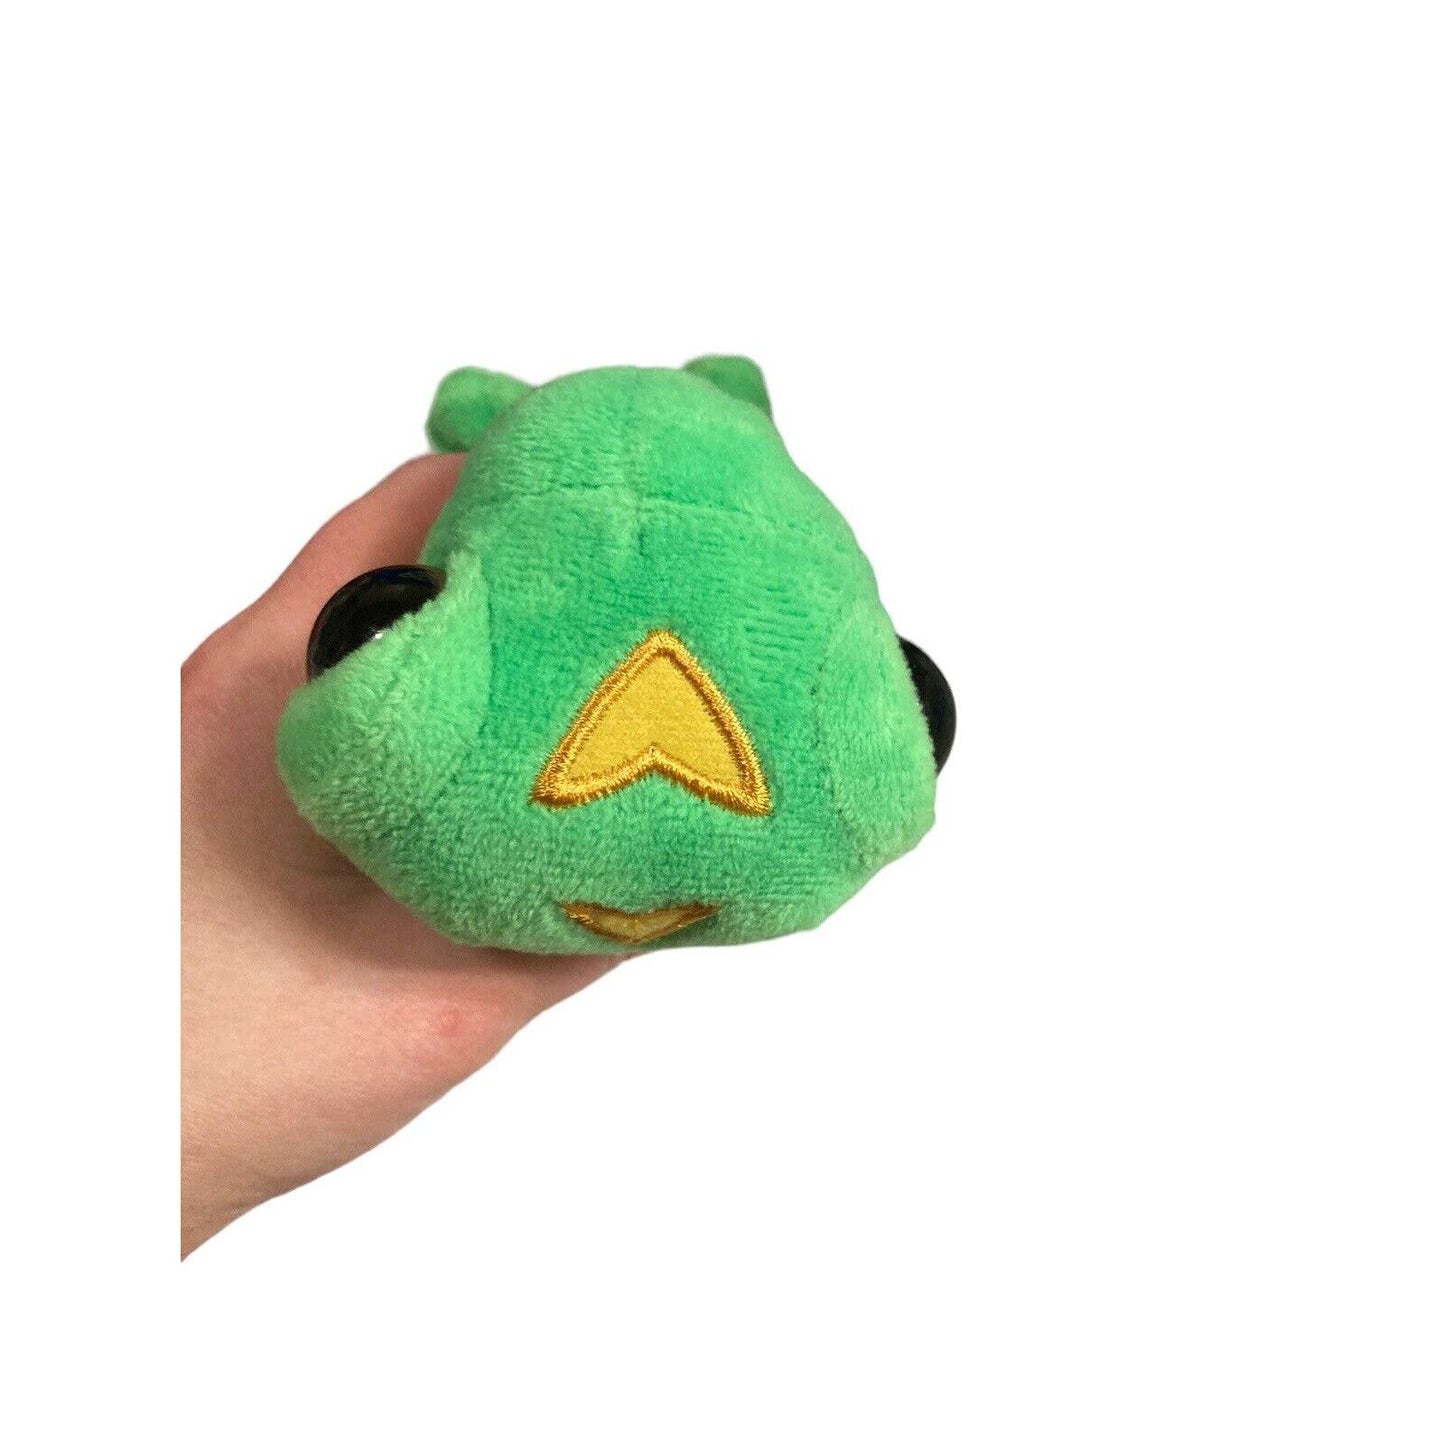 Geico GECKO 5" Plush Green Advertising Lizard Mascot Stuffed Animal Toy